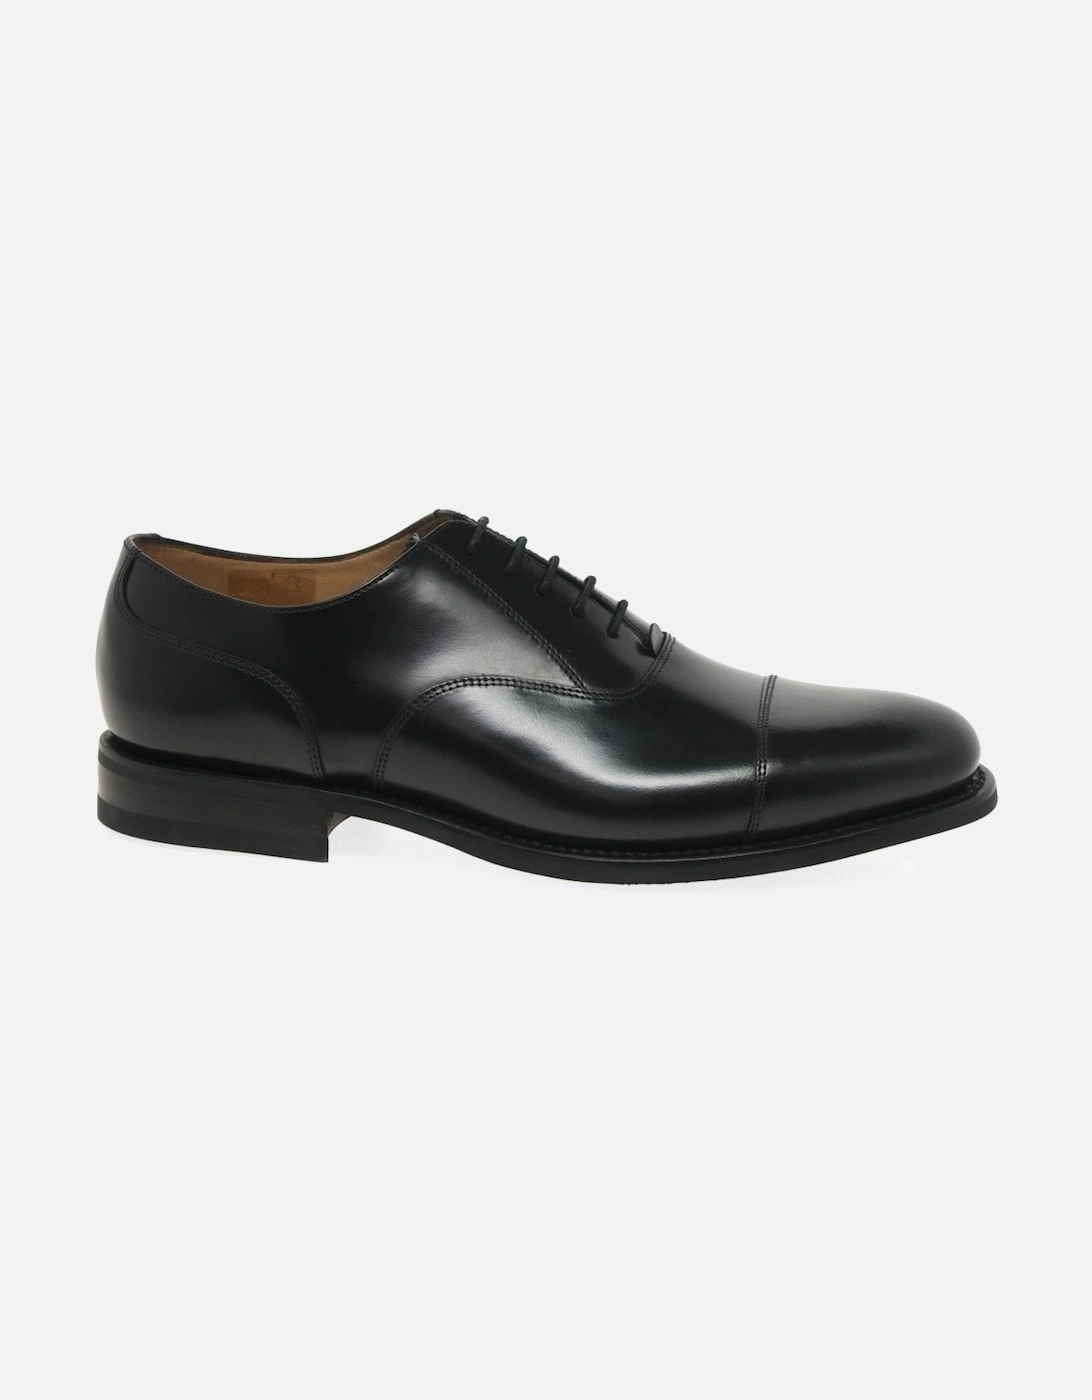 300B Mens Formal Oxford Shoes